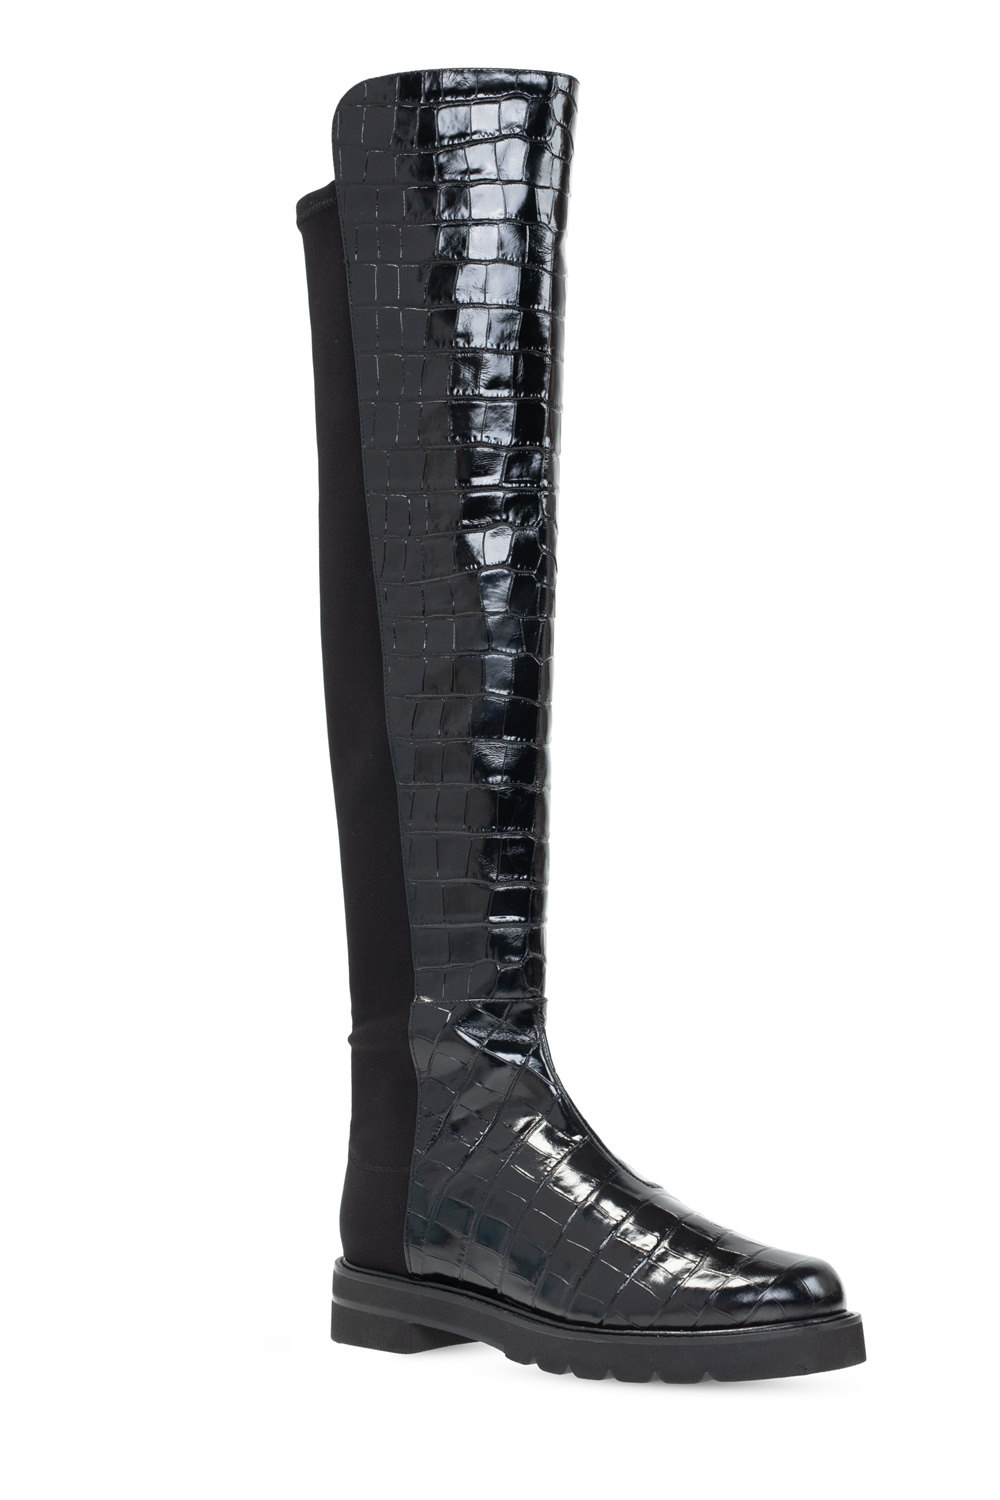 Stuart Weitzman ‘Lift’ leather boots